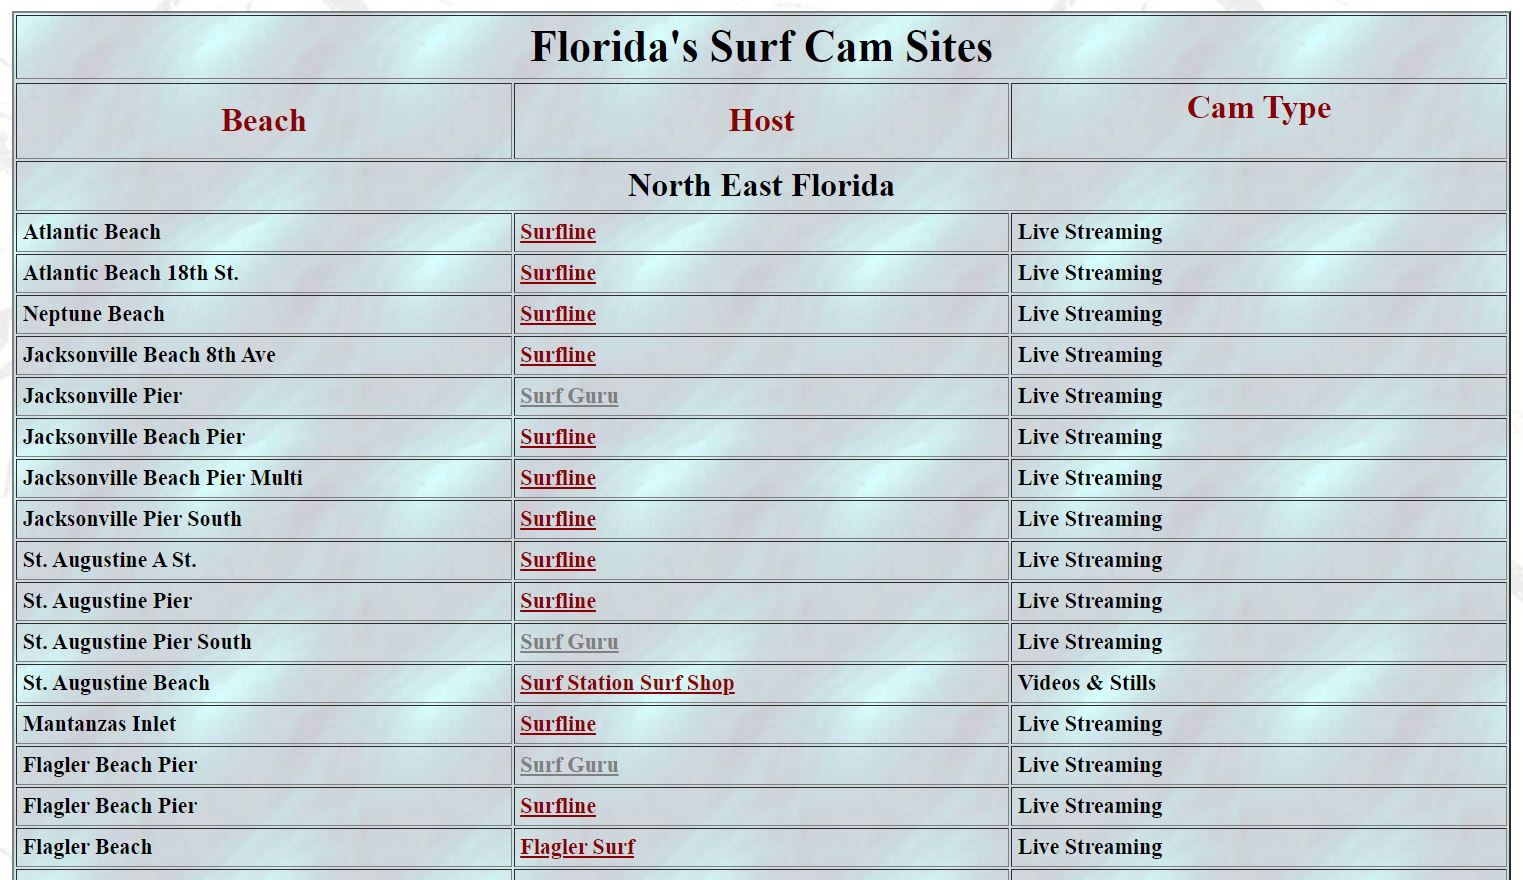 Florida's Surf Cams